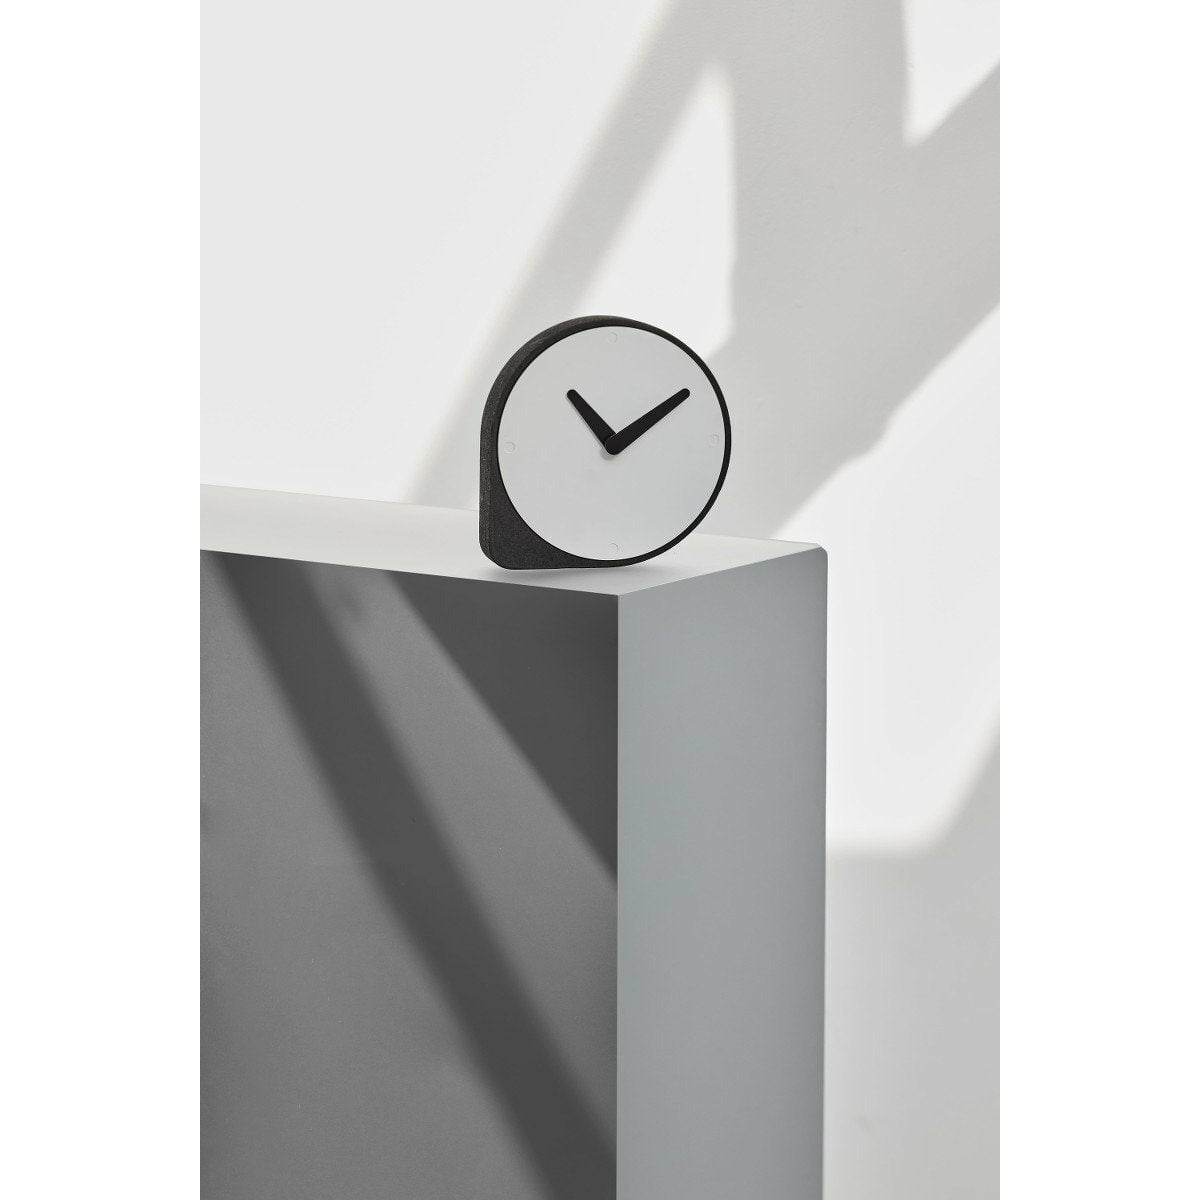 A Puik Clork Table Clock, Black sitting on top of an asymmetrical white box.